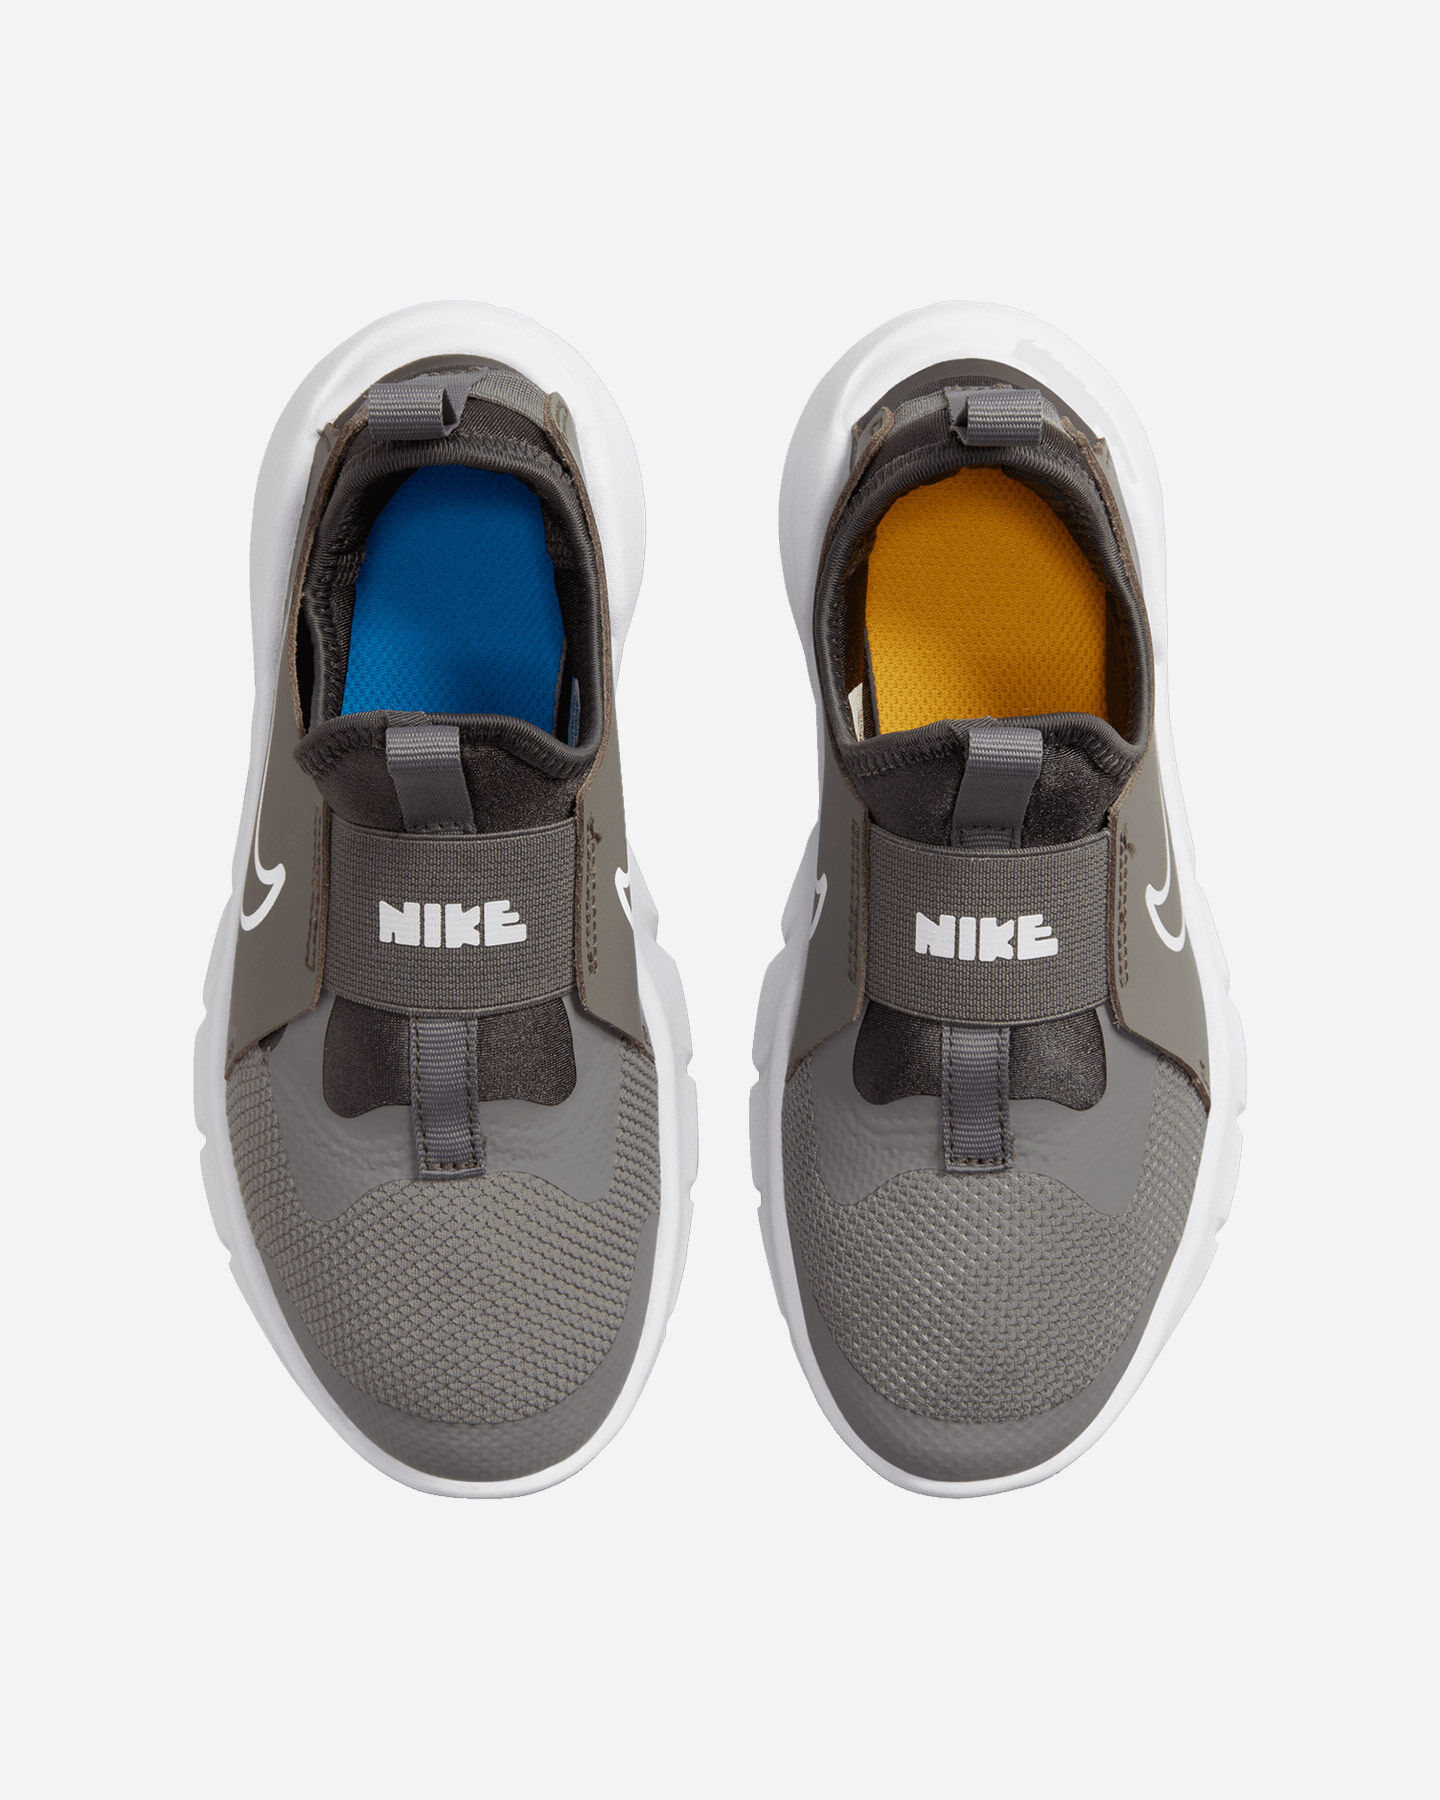  Scarpe sneakers NIKE FLEX RUNNER 2 PS JR S5586132|003|11C scatto 3